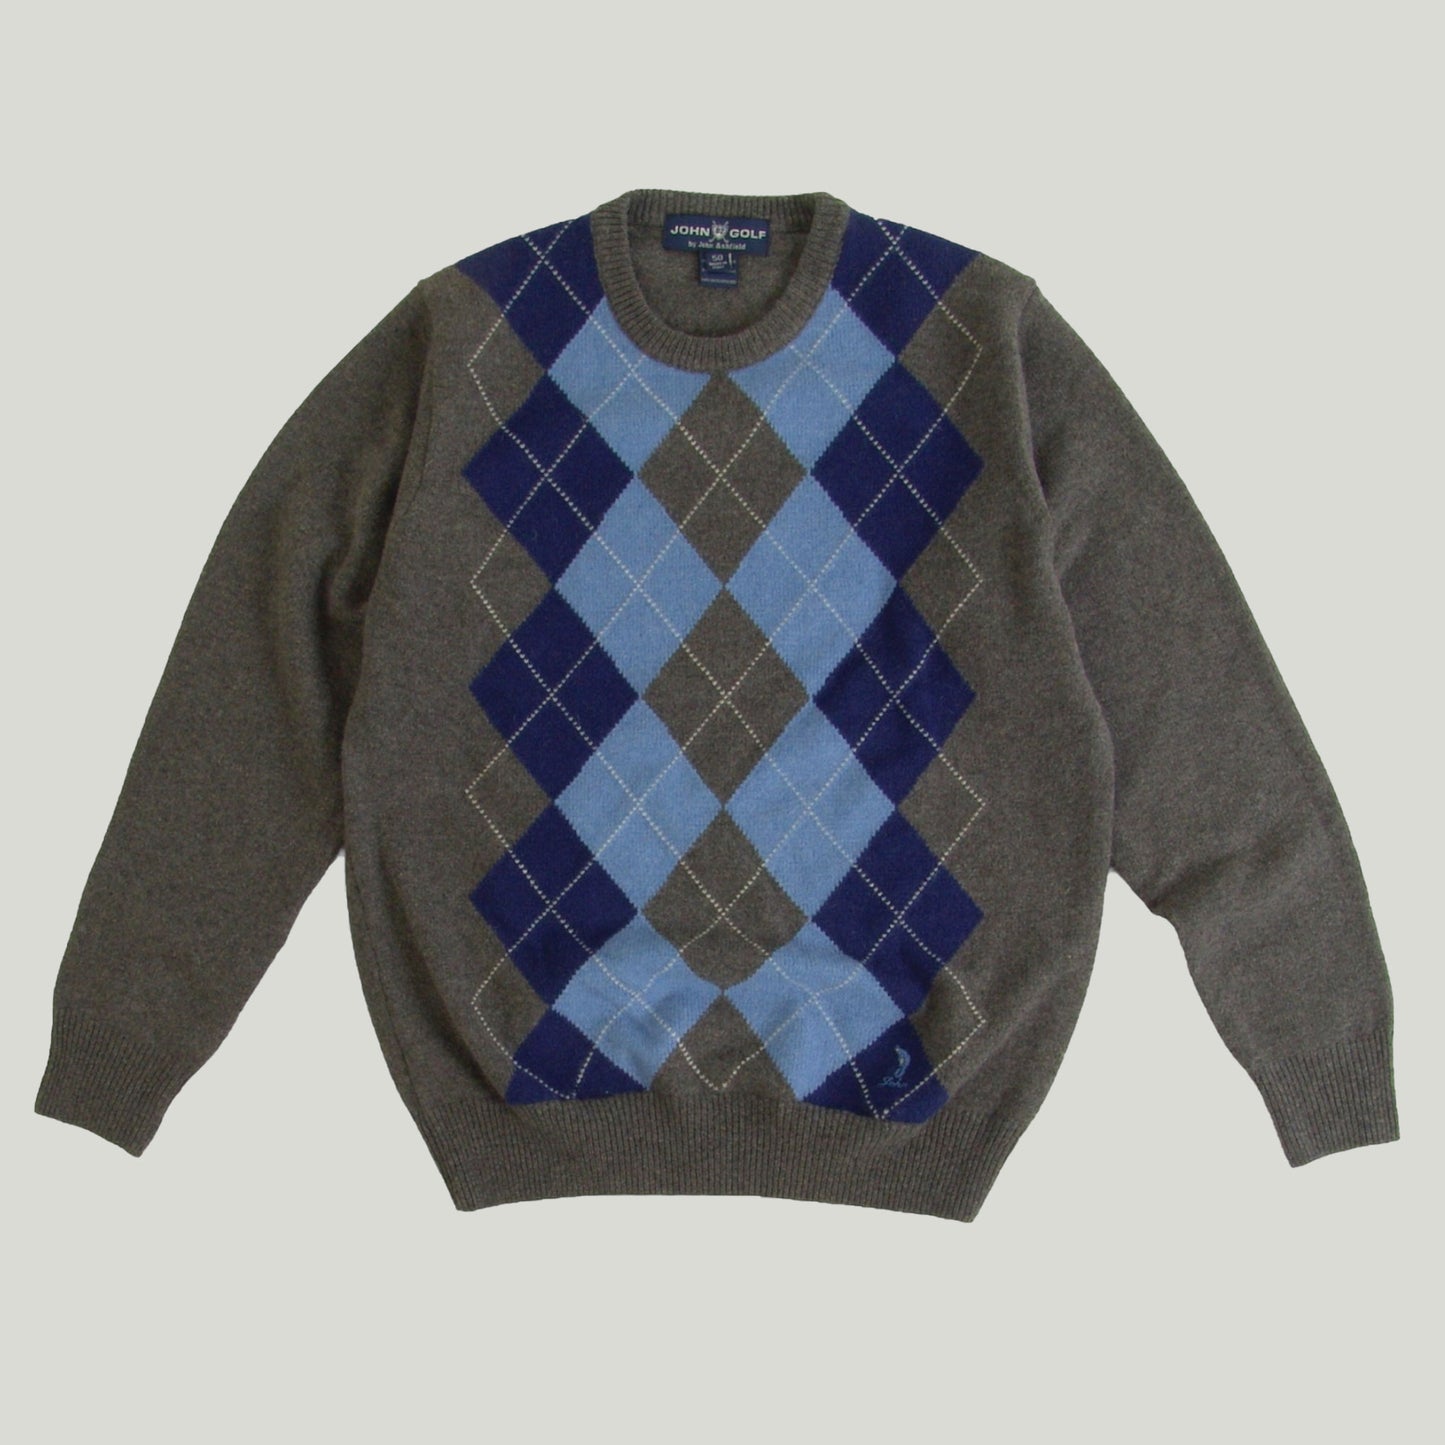 Men's crewneck rhombus sweater